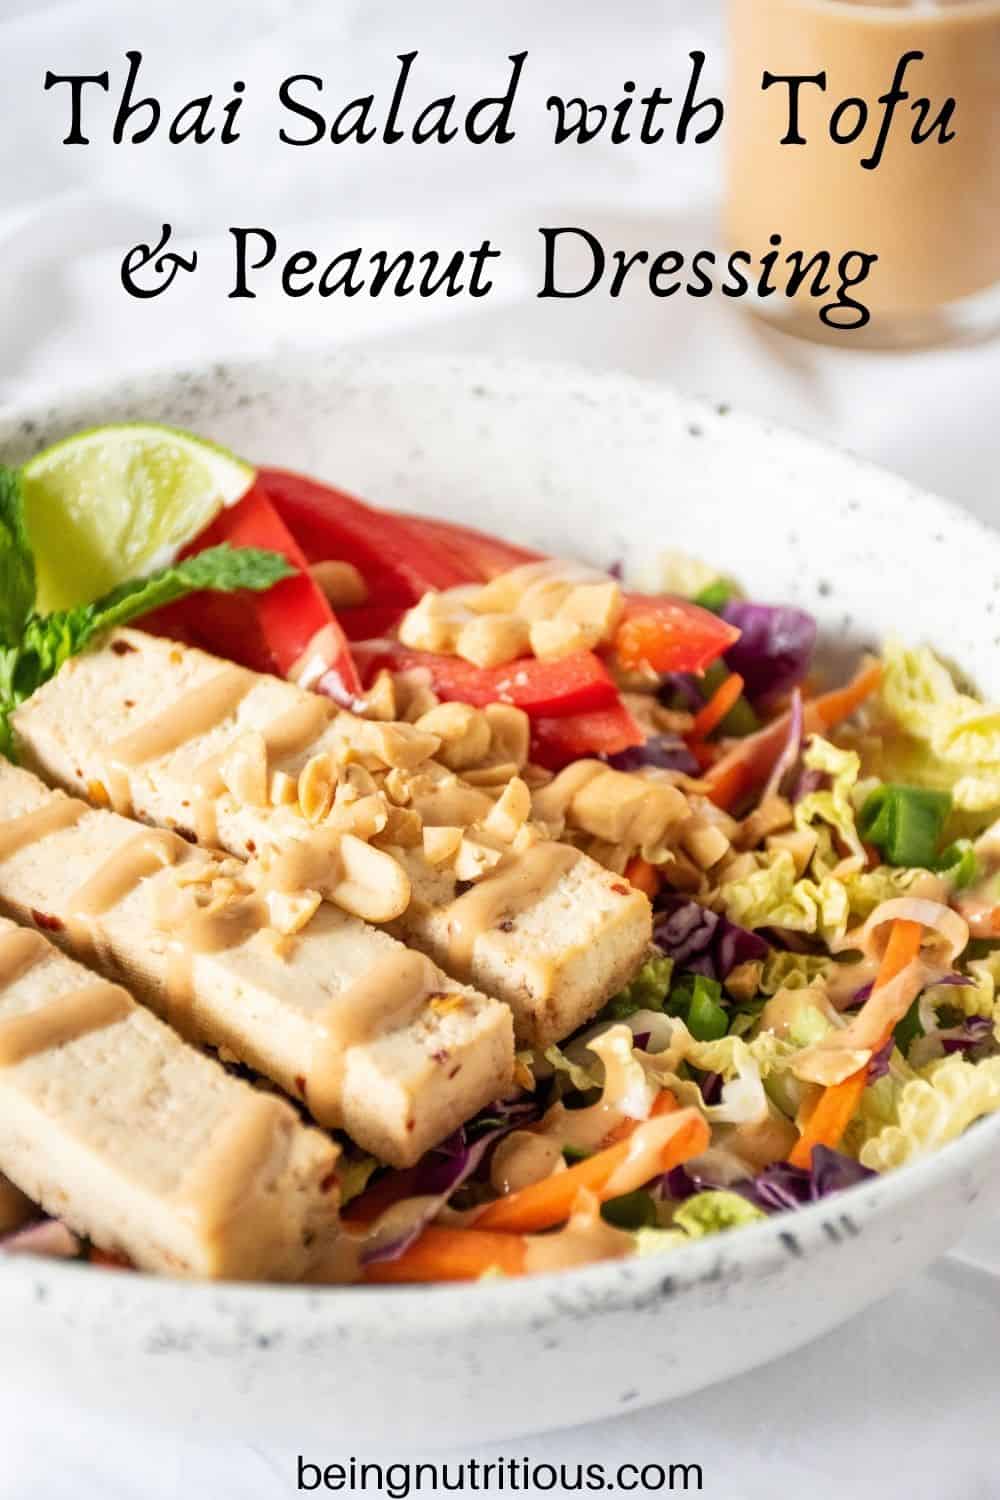 Bowl of Thai salad with tofu. Text overlay: Thai Salad with Tofu and Peanut Dressing.